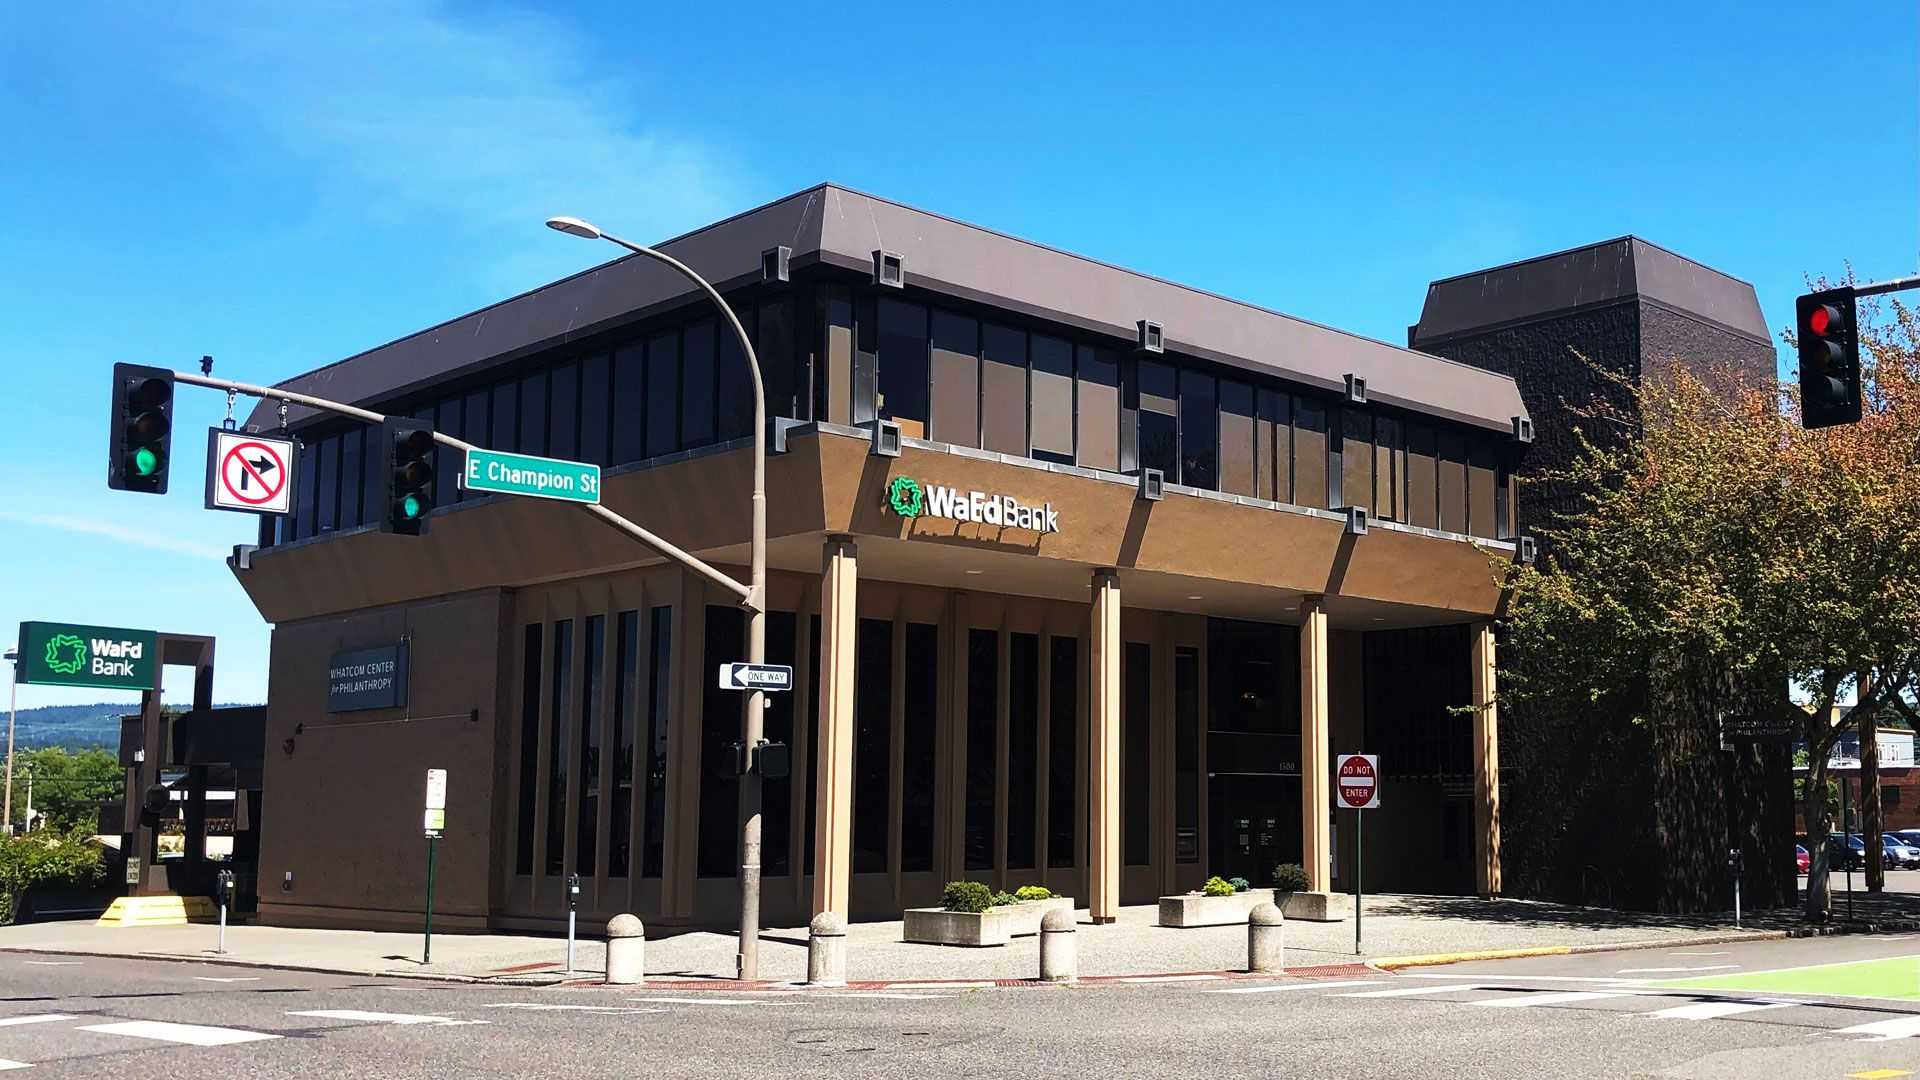 WaFd Bank in Bellingham, Washington #1232 - Washington Federal.